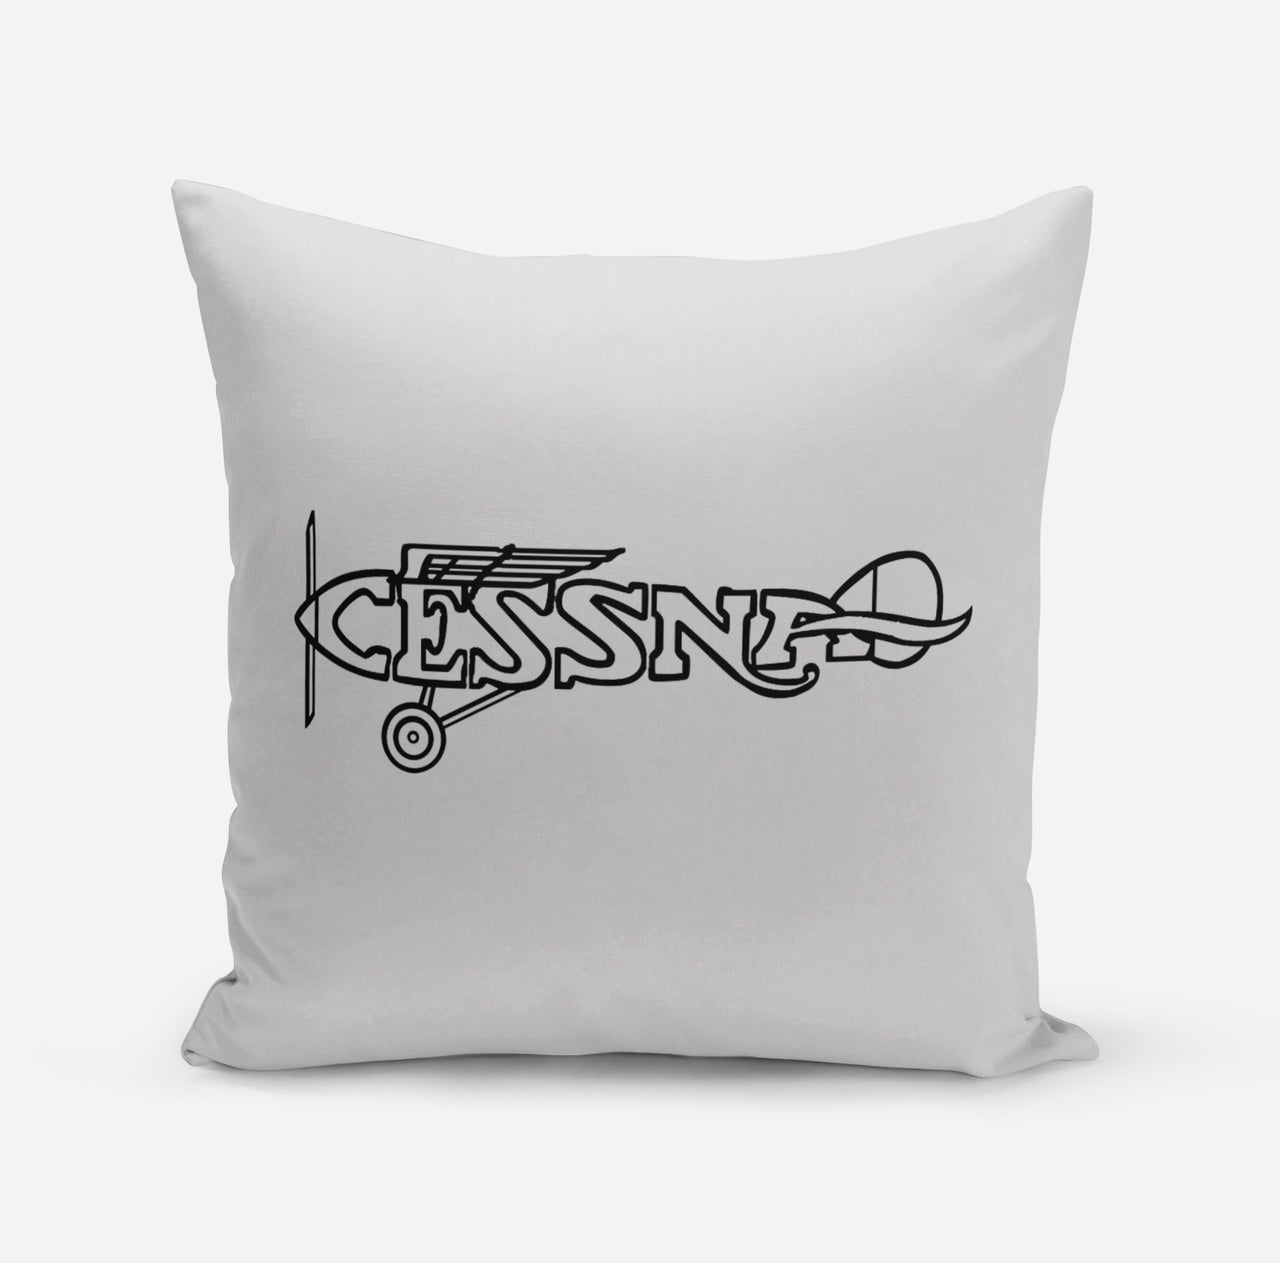 Special Cessna Text Designed Pillows